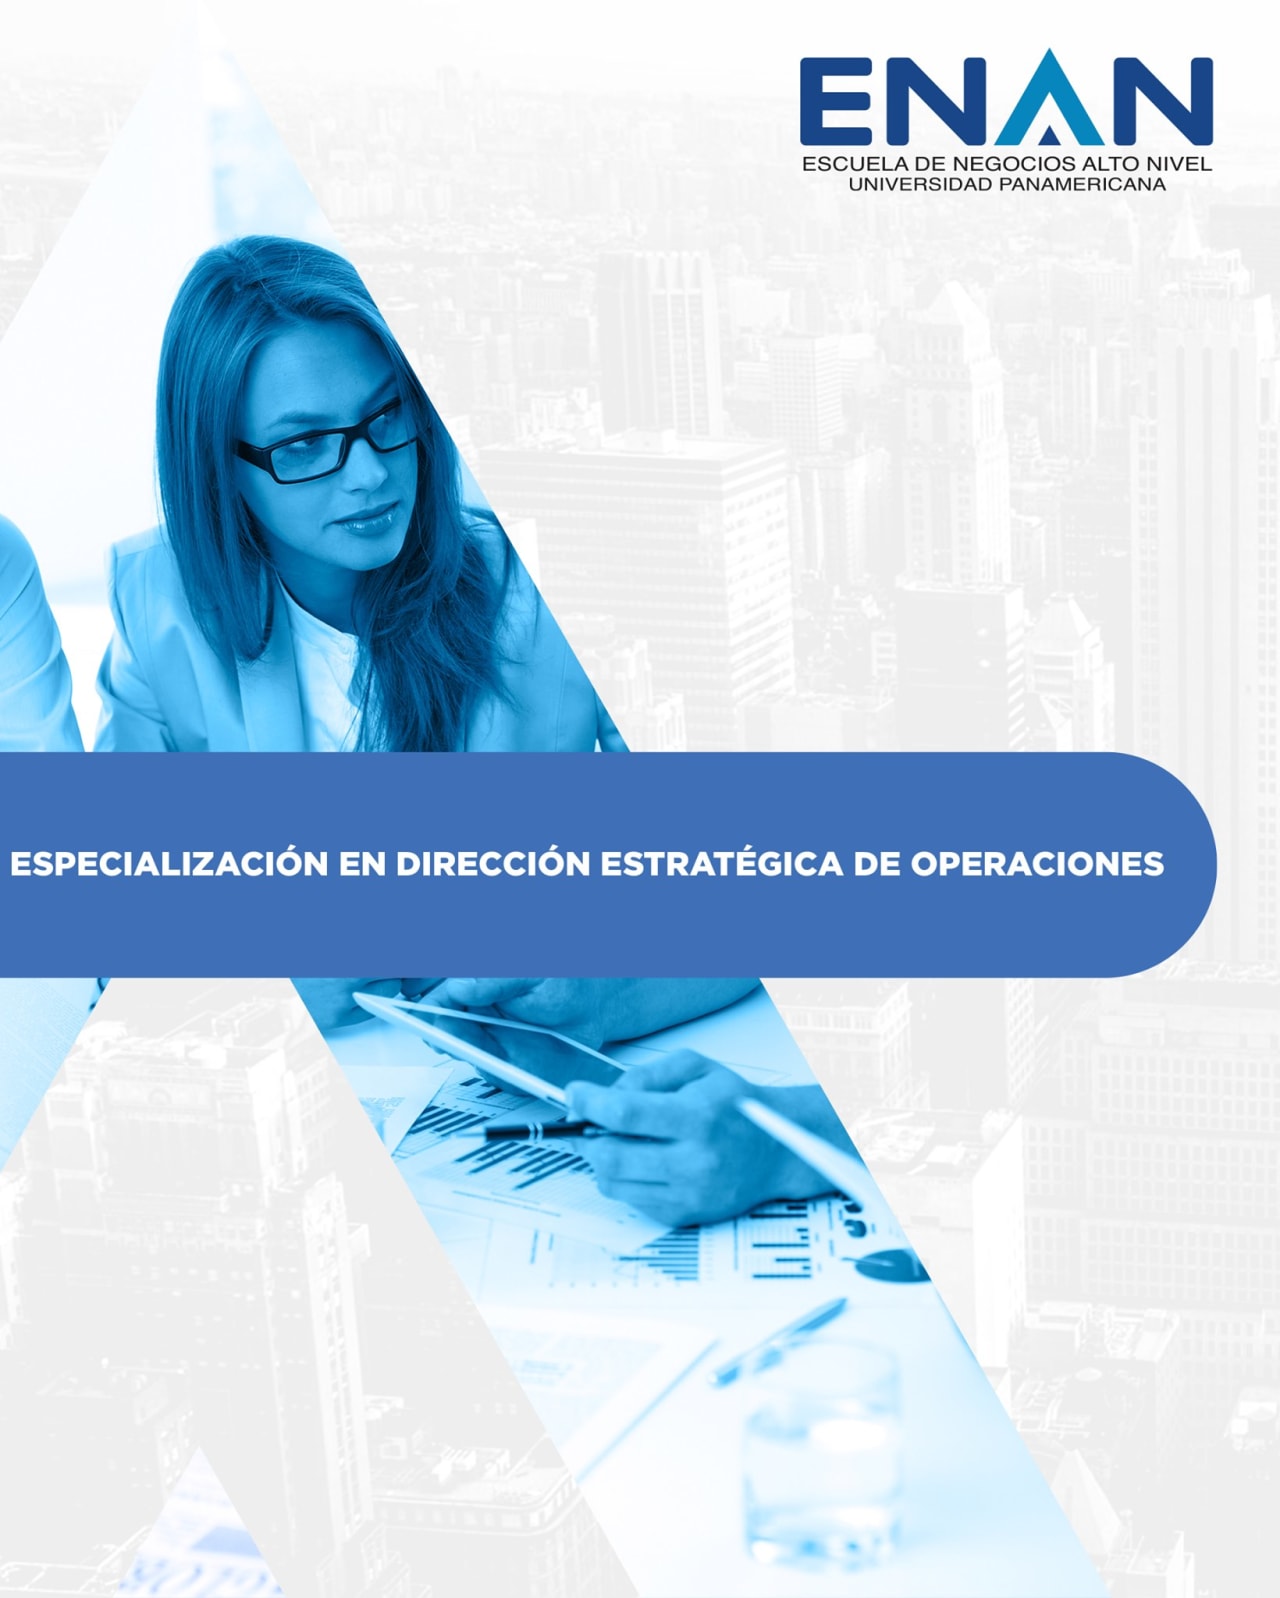 Escuela de Negocios Alto Nivel - Universidad Panamericana de Guatemala Specialization in Strategic Operations Management